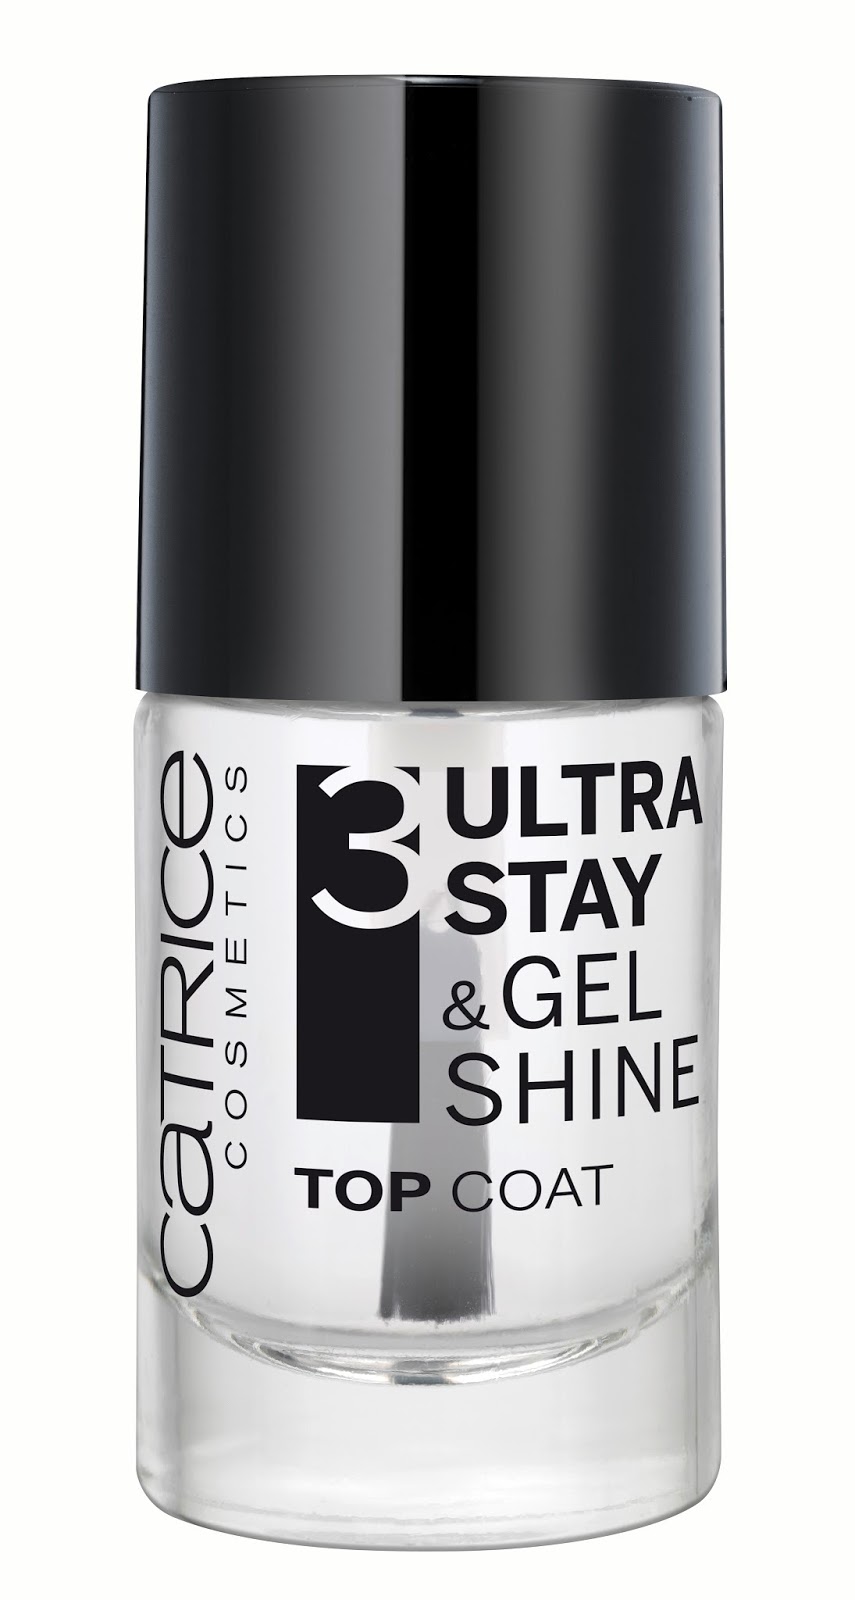 Catricce - Ultra Stay & Gel Shine Top Coat